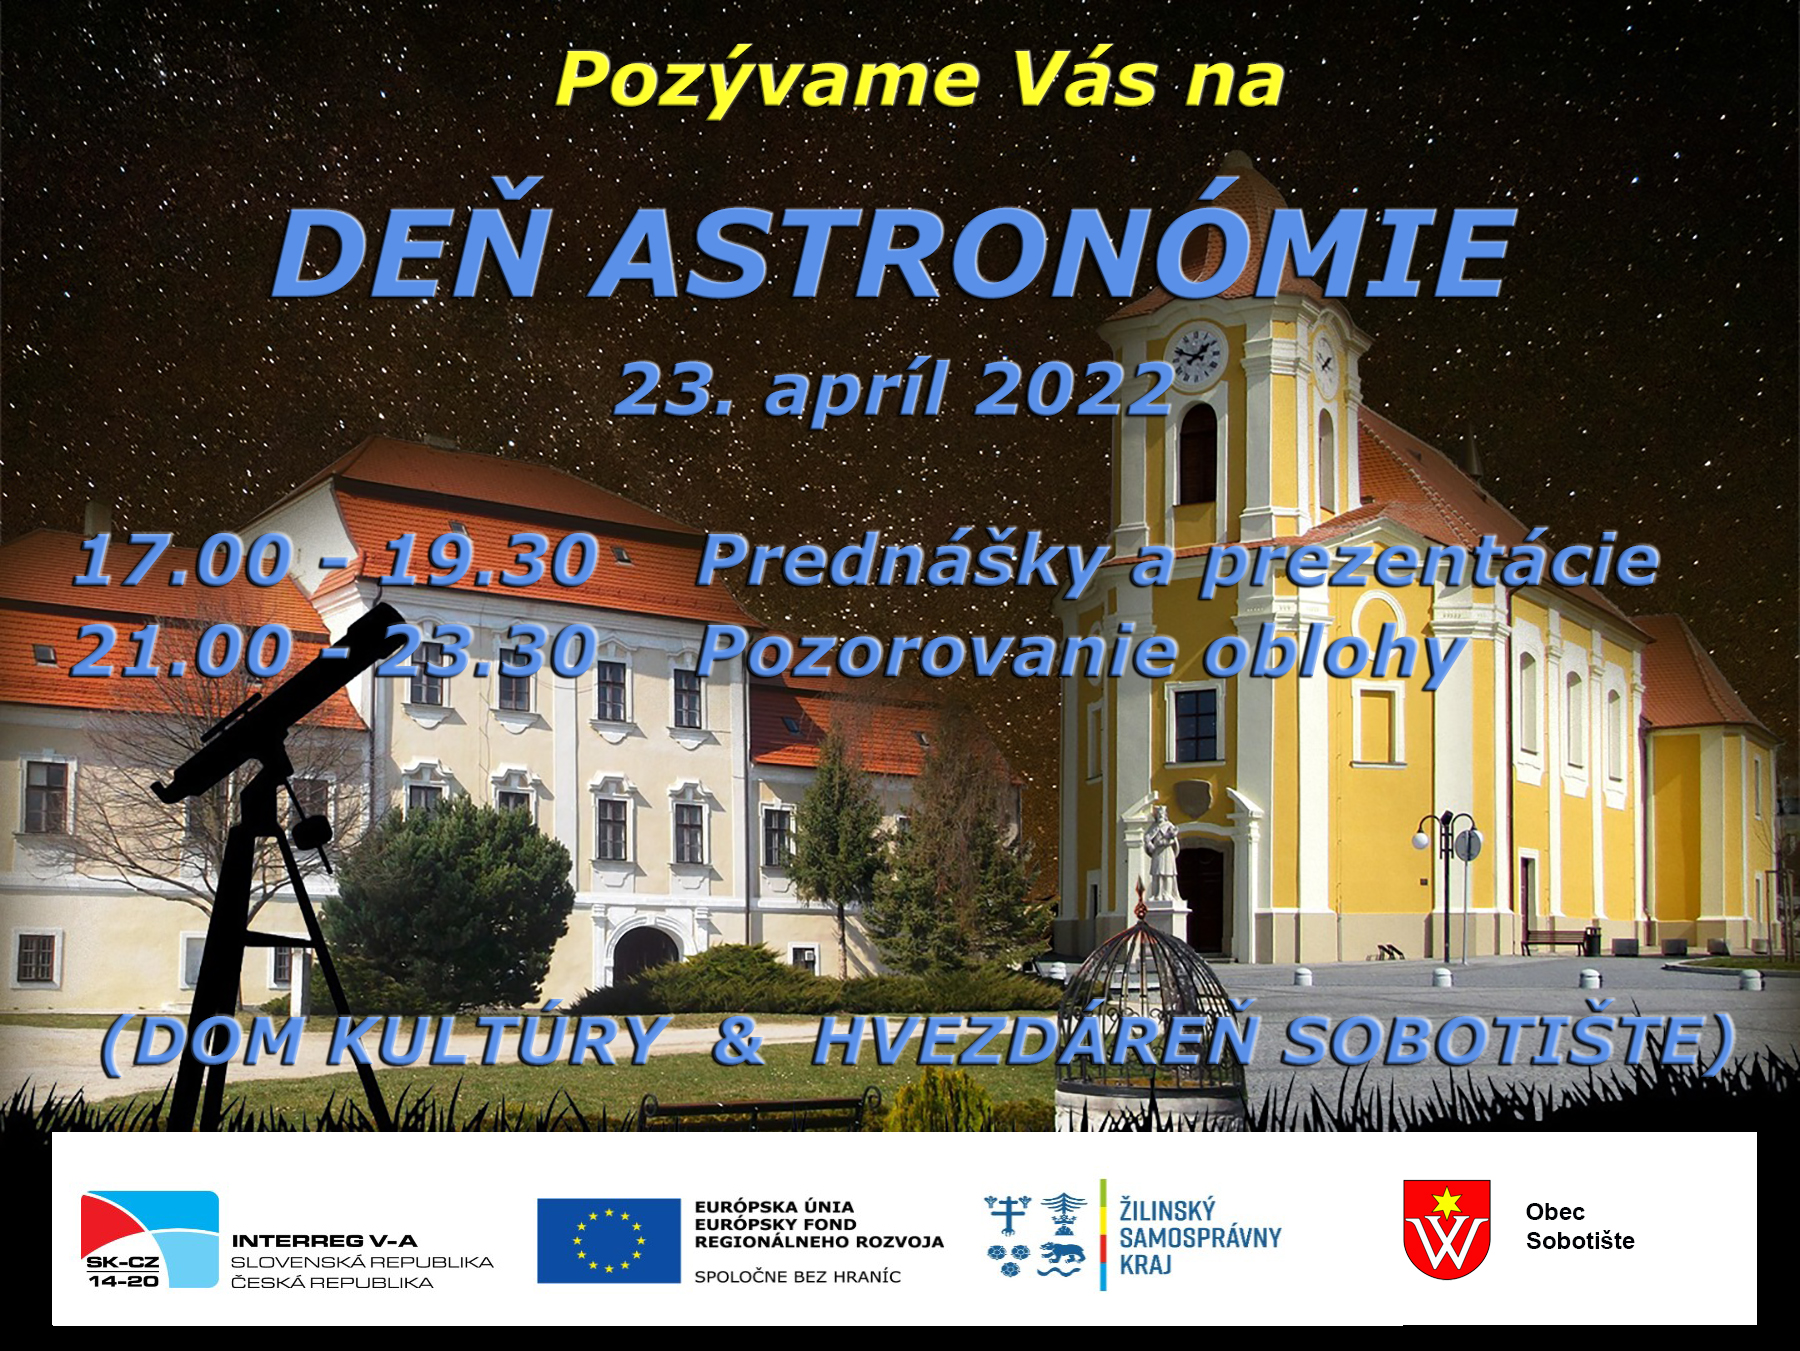 Deň astronómie 2022